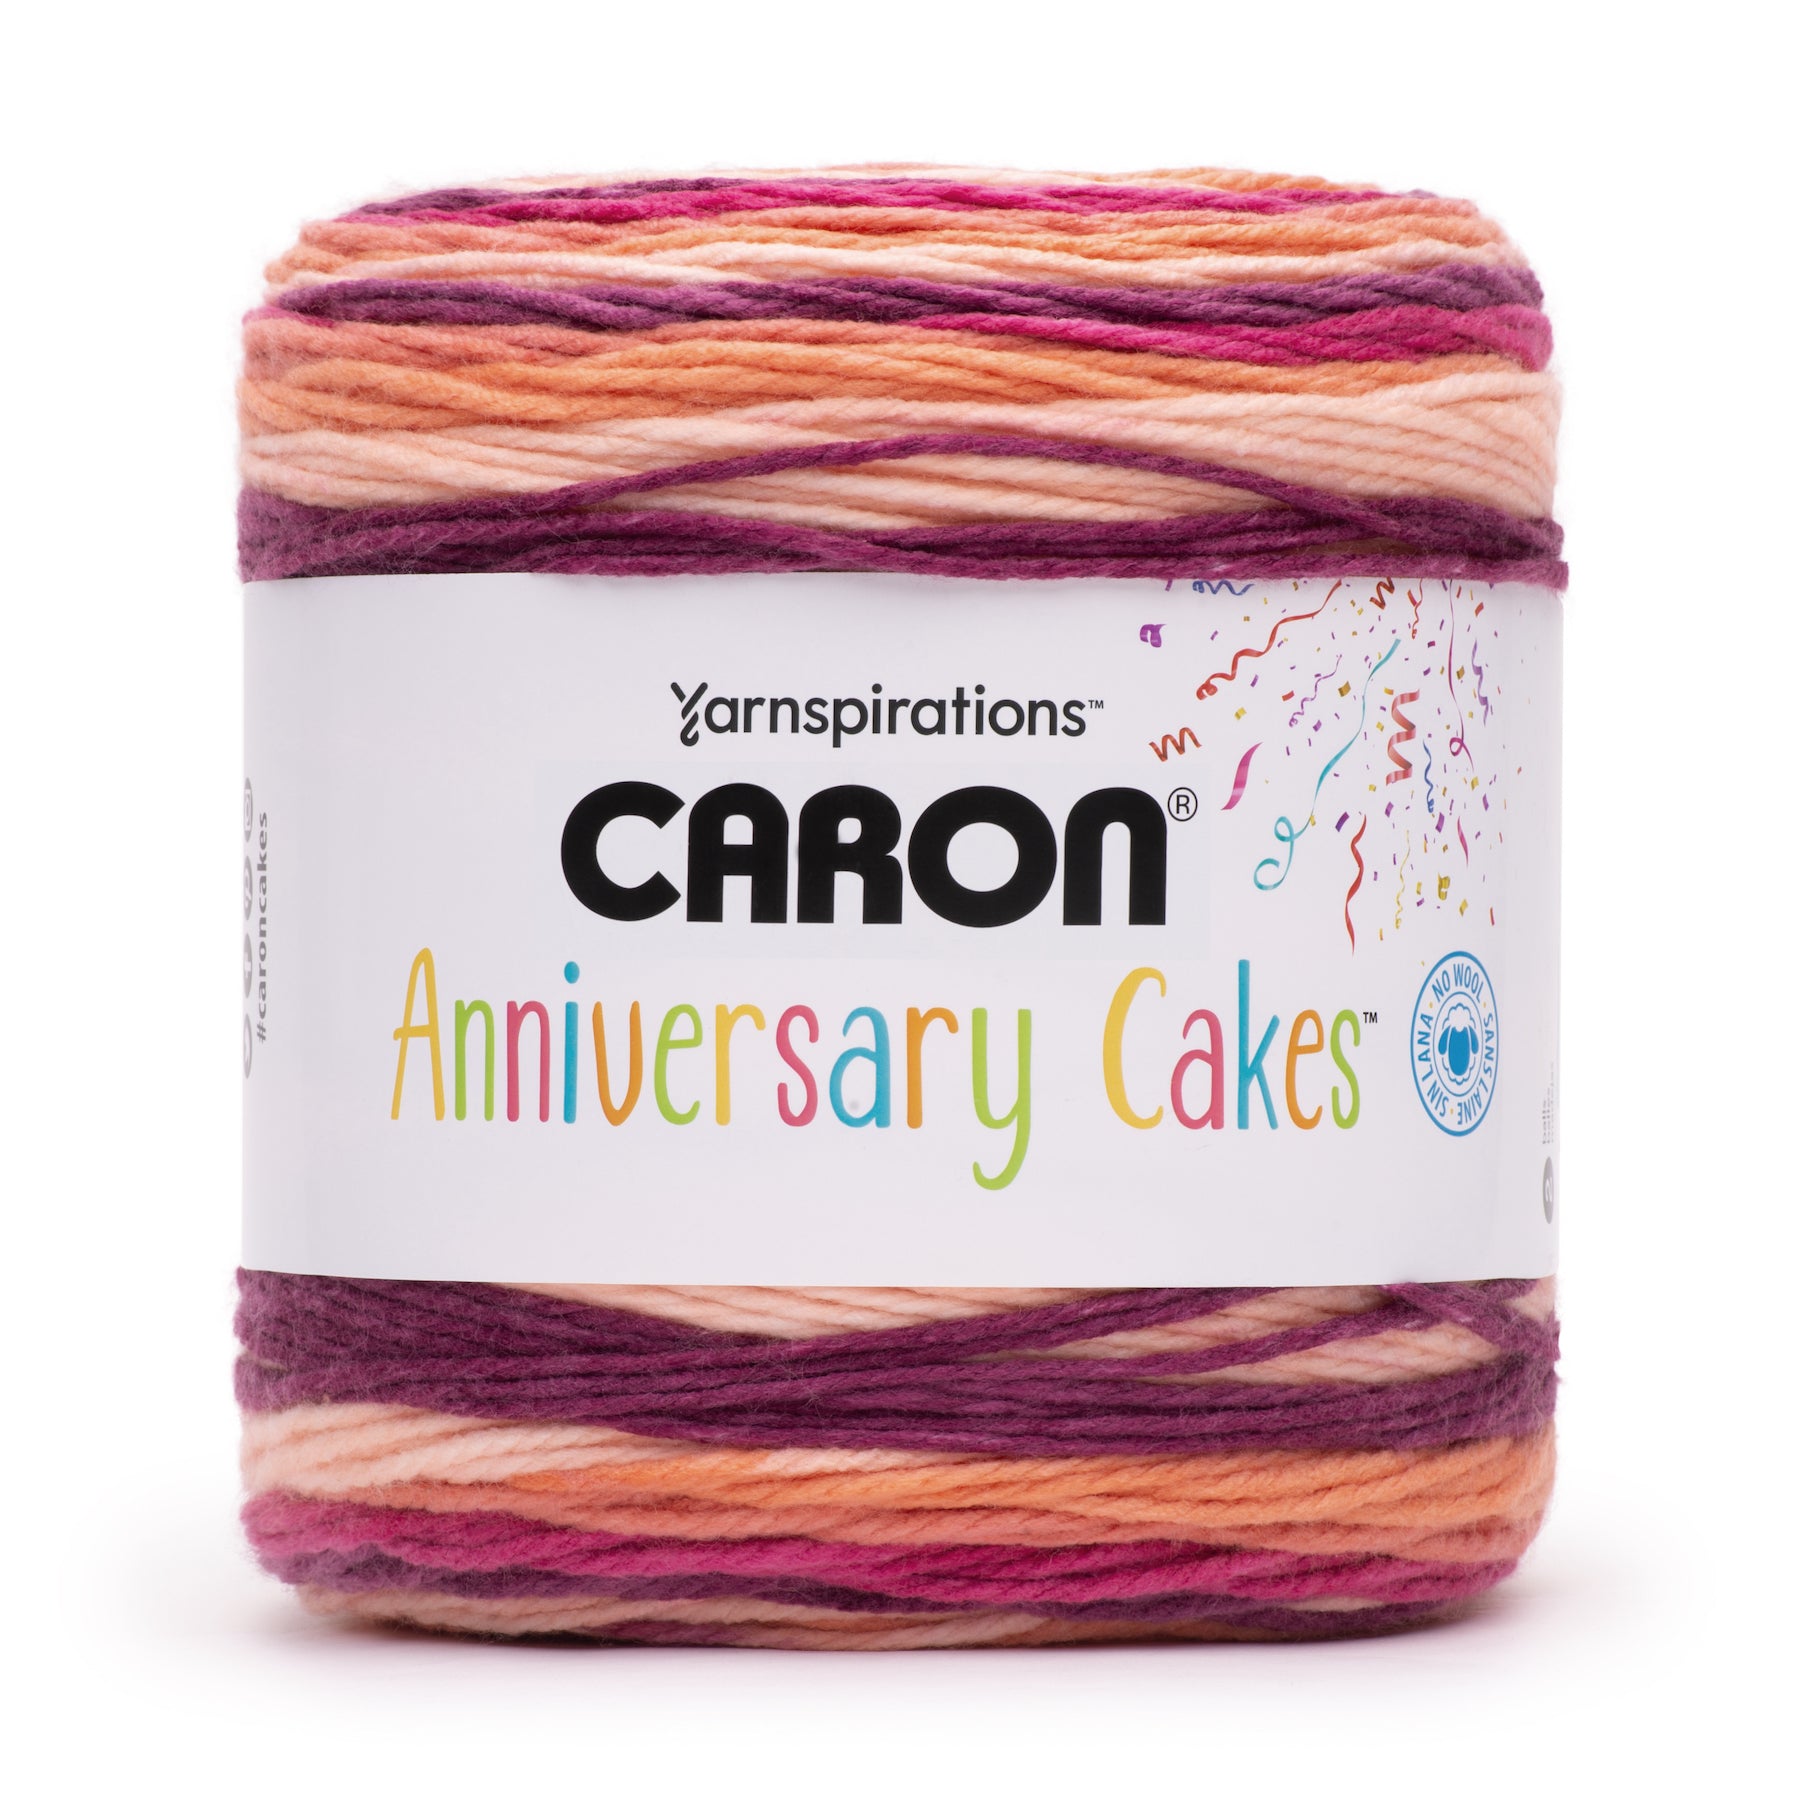 Reef Blue, Blanket Yarn, Caron Anniversary Cakes, Super Bulky #6